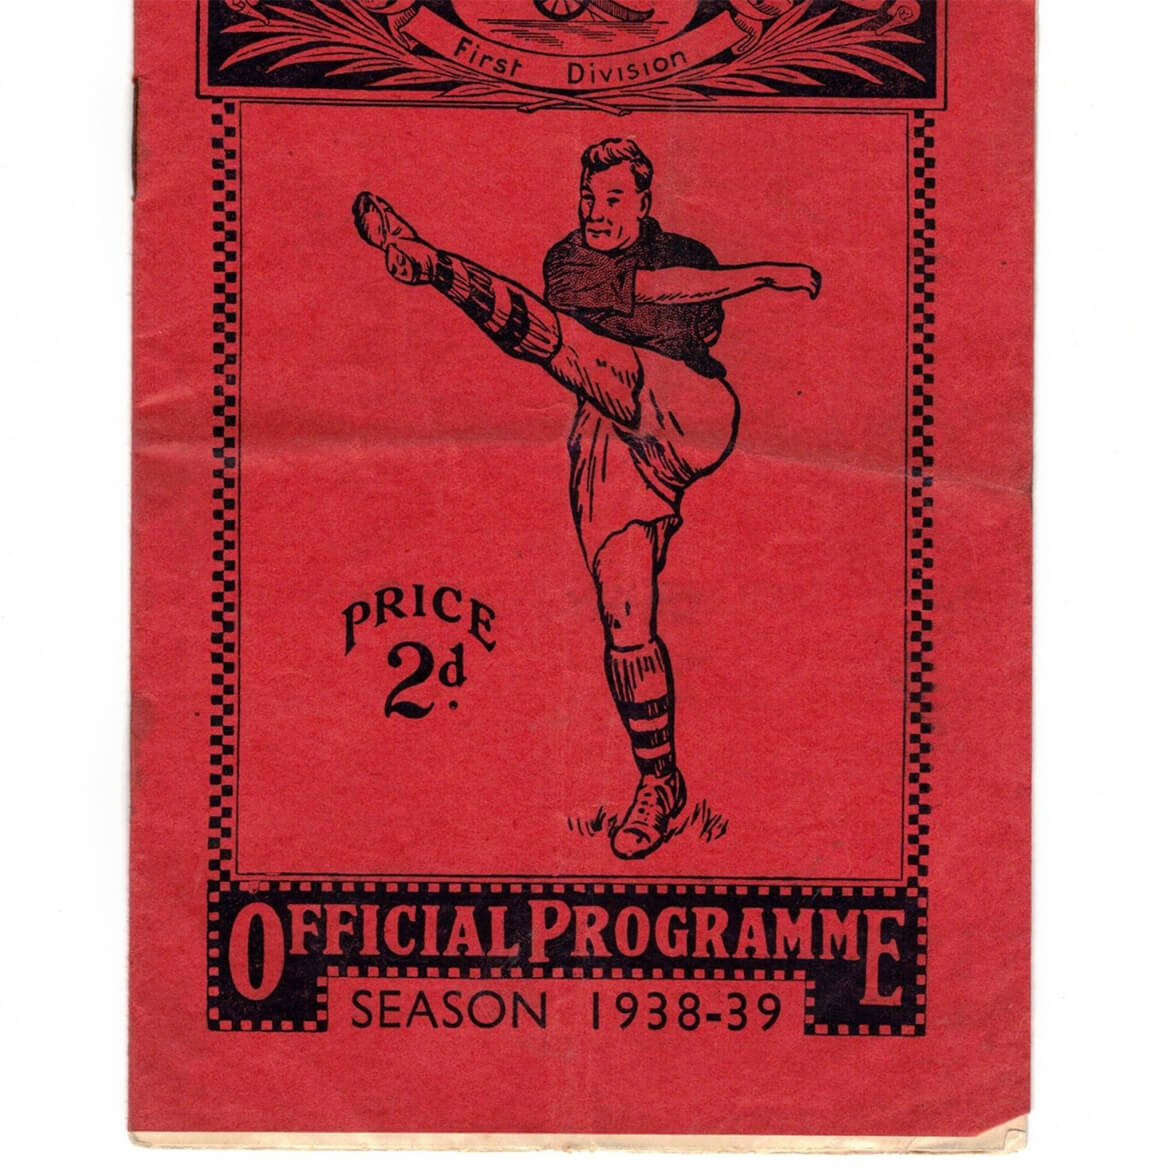 Pre-war Programmes